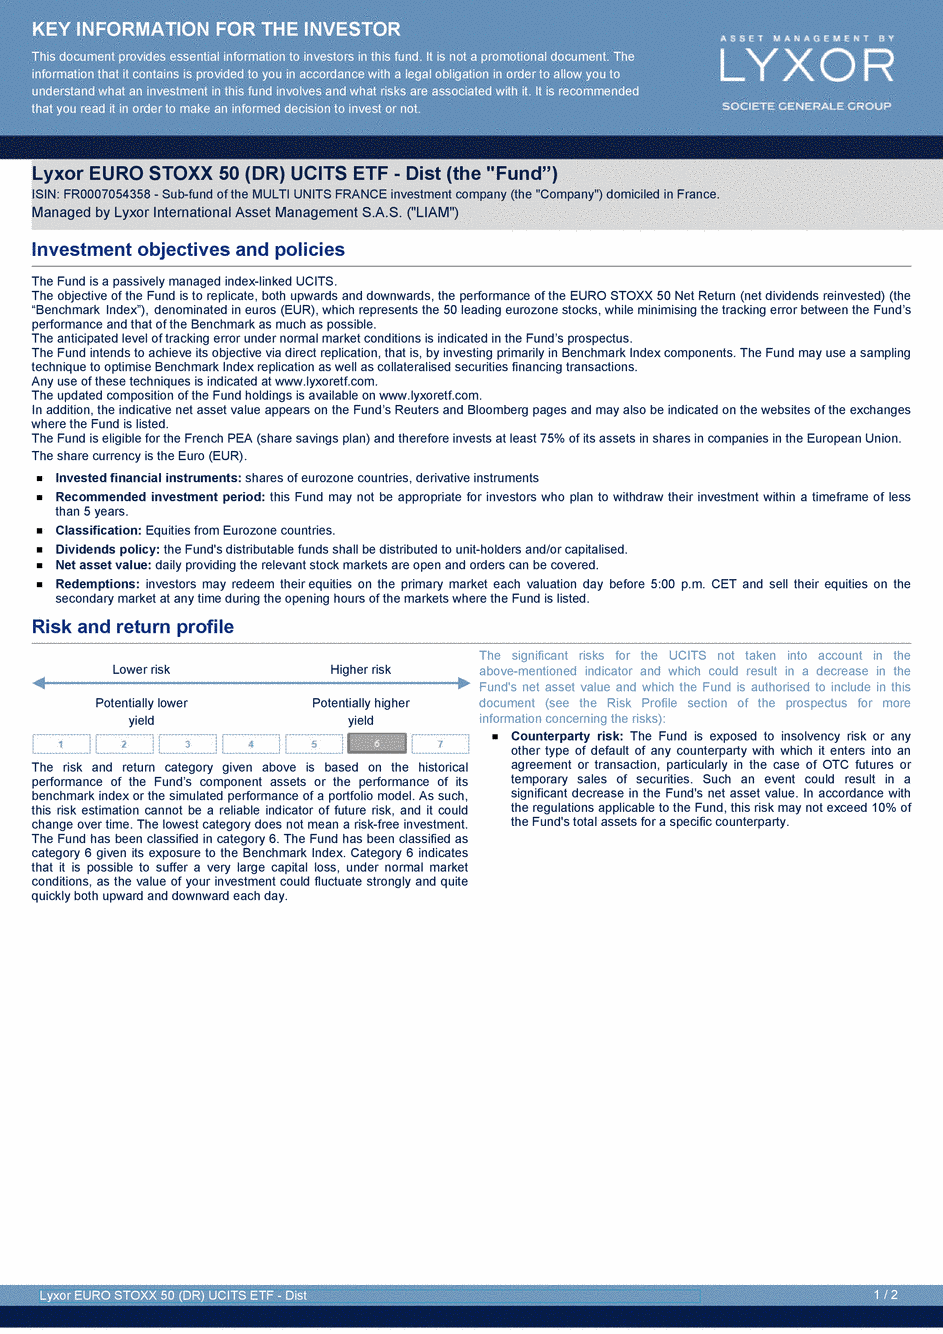 DICI Lyxor EURO STOXX 50 (DR) UCITS ETF - Acc - 19/02/2020 - Anglais